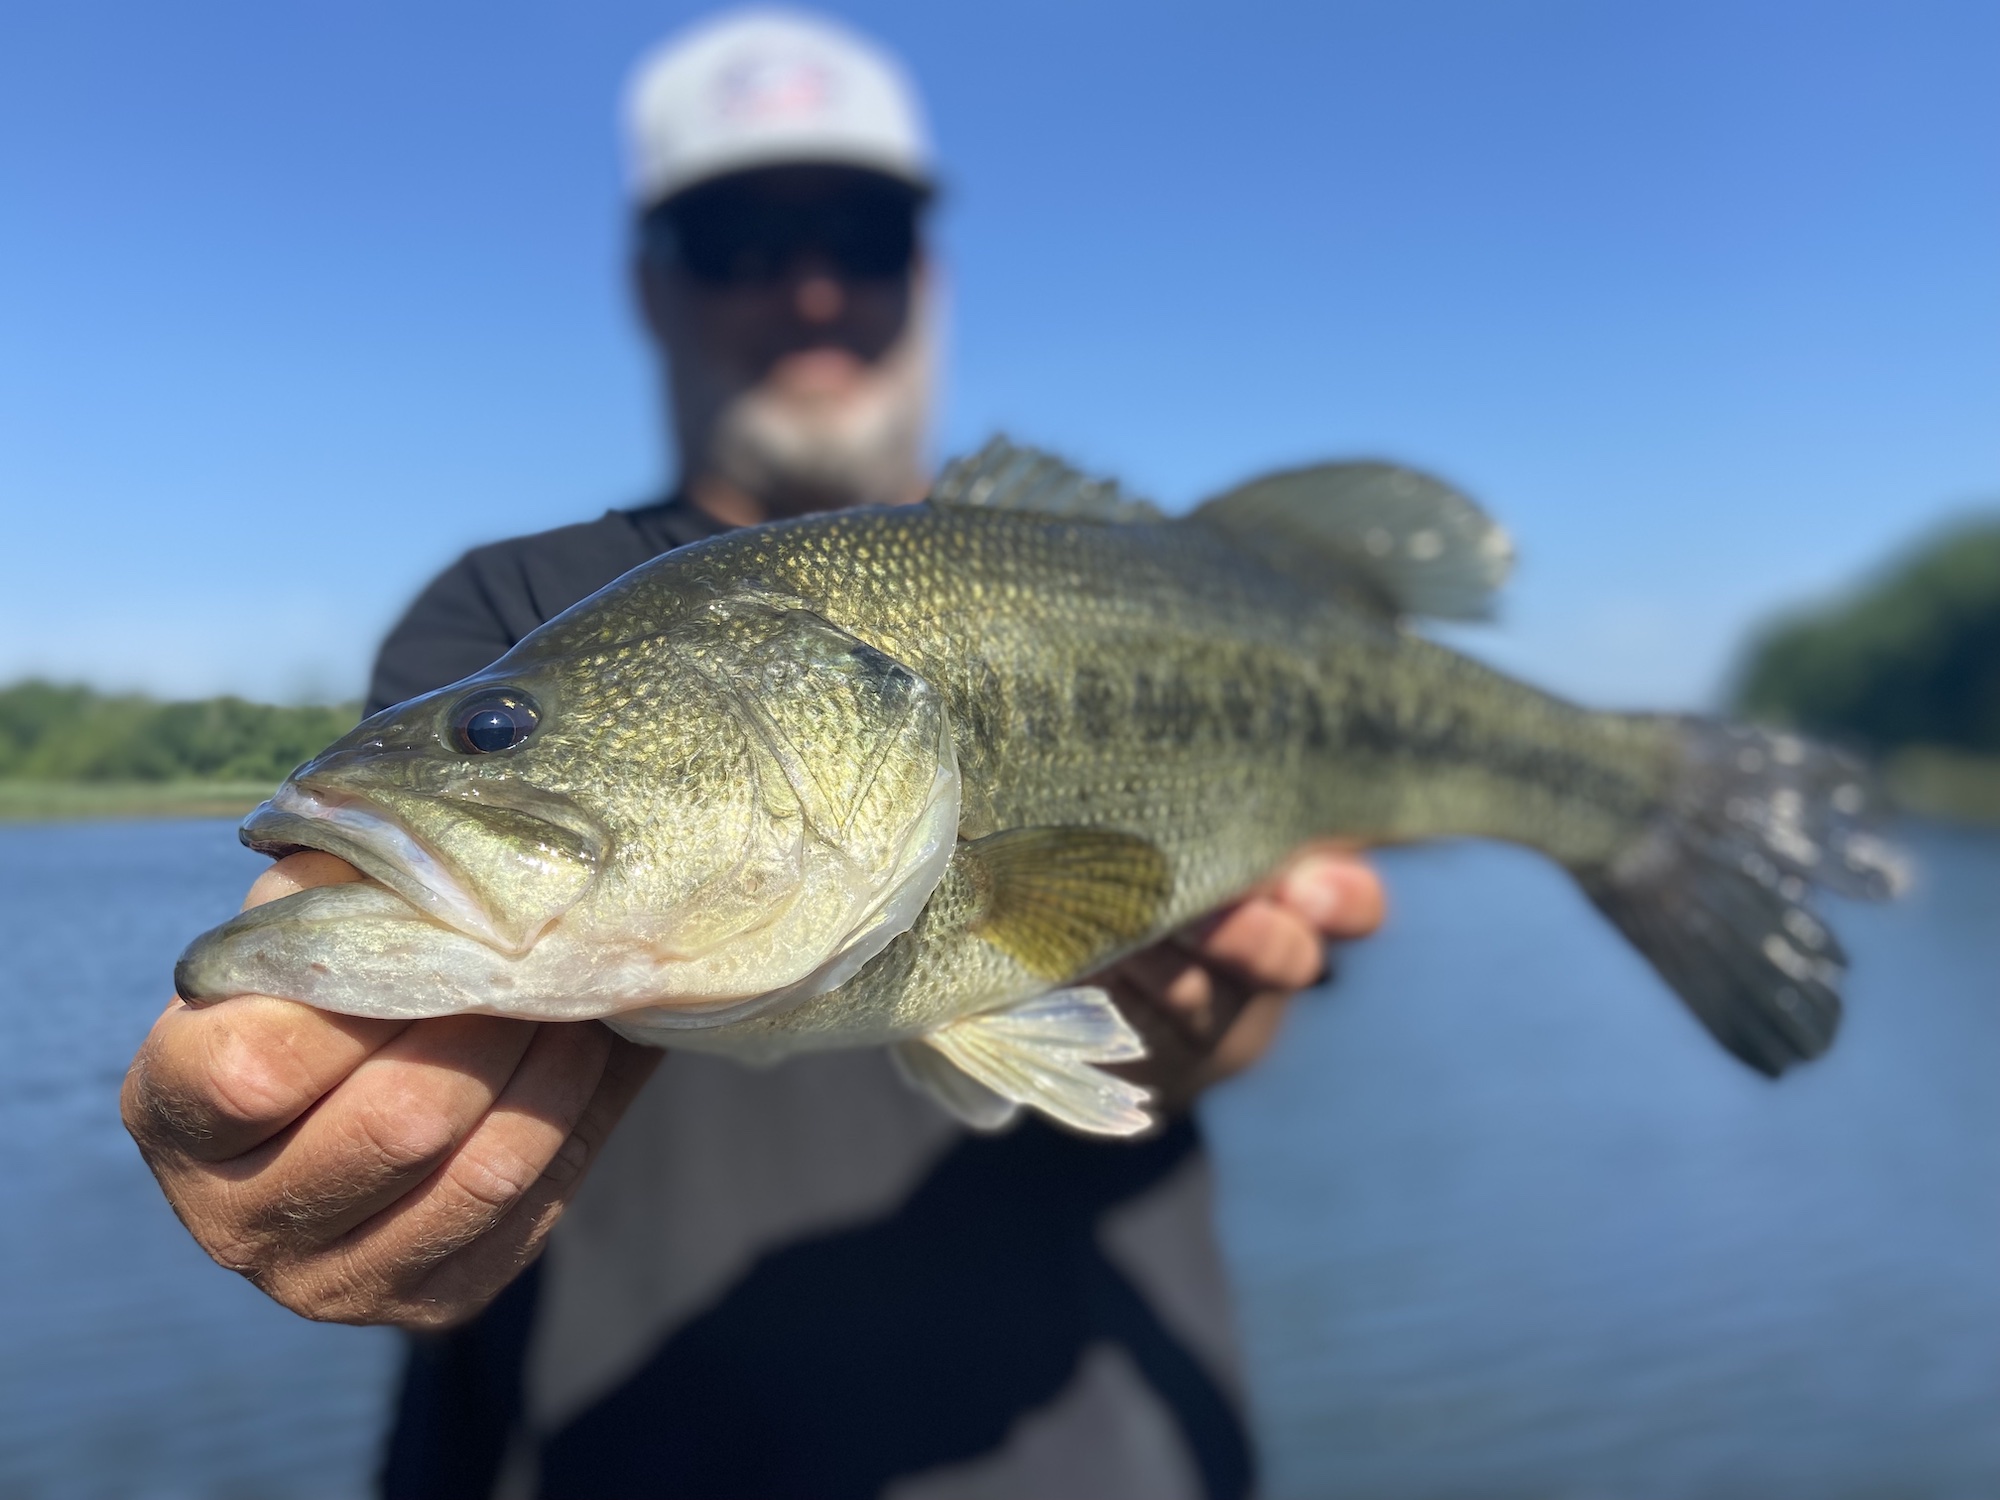 https://www.outdoorlife.com/wp-content/uploads/2023/01/19/best_bass_fishing_tips_for_beginners.jpg